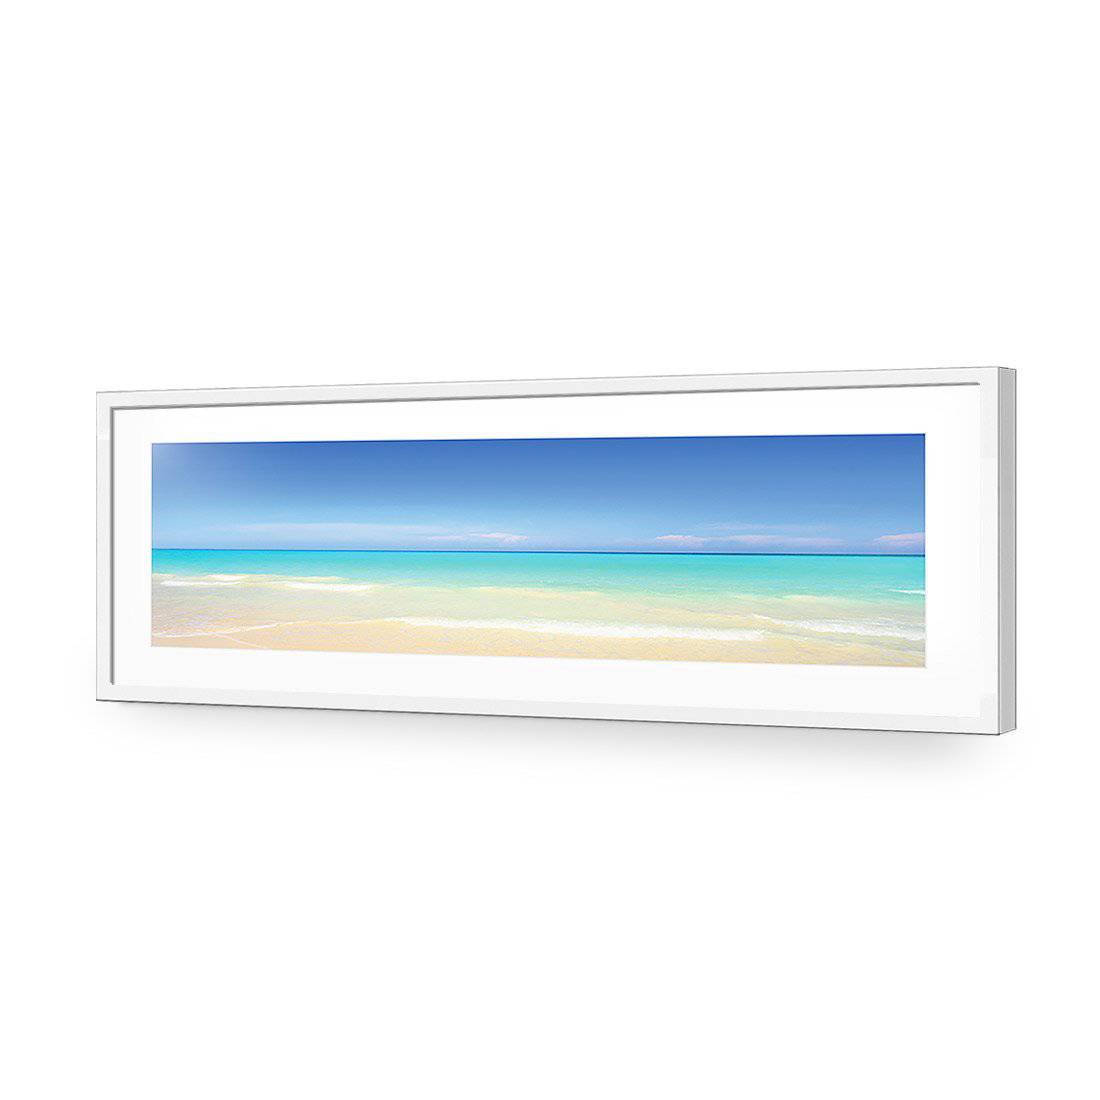 Paradise Beach, Long-Acrylic-Wall Art Design-With Border-Acrylic - White Frame-60x20cm-Wall Art Designs